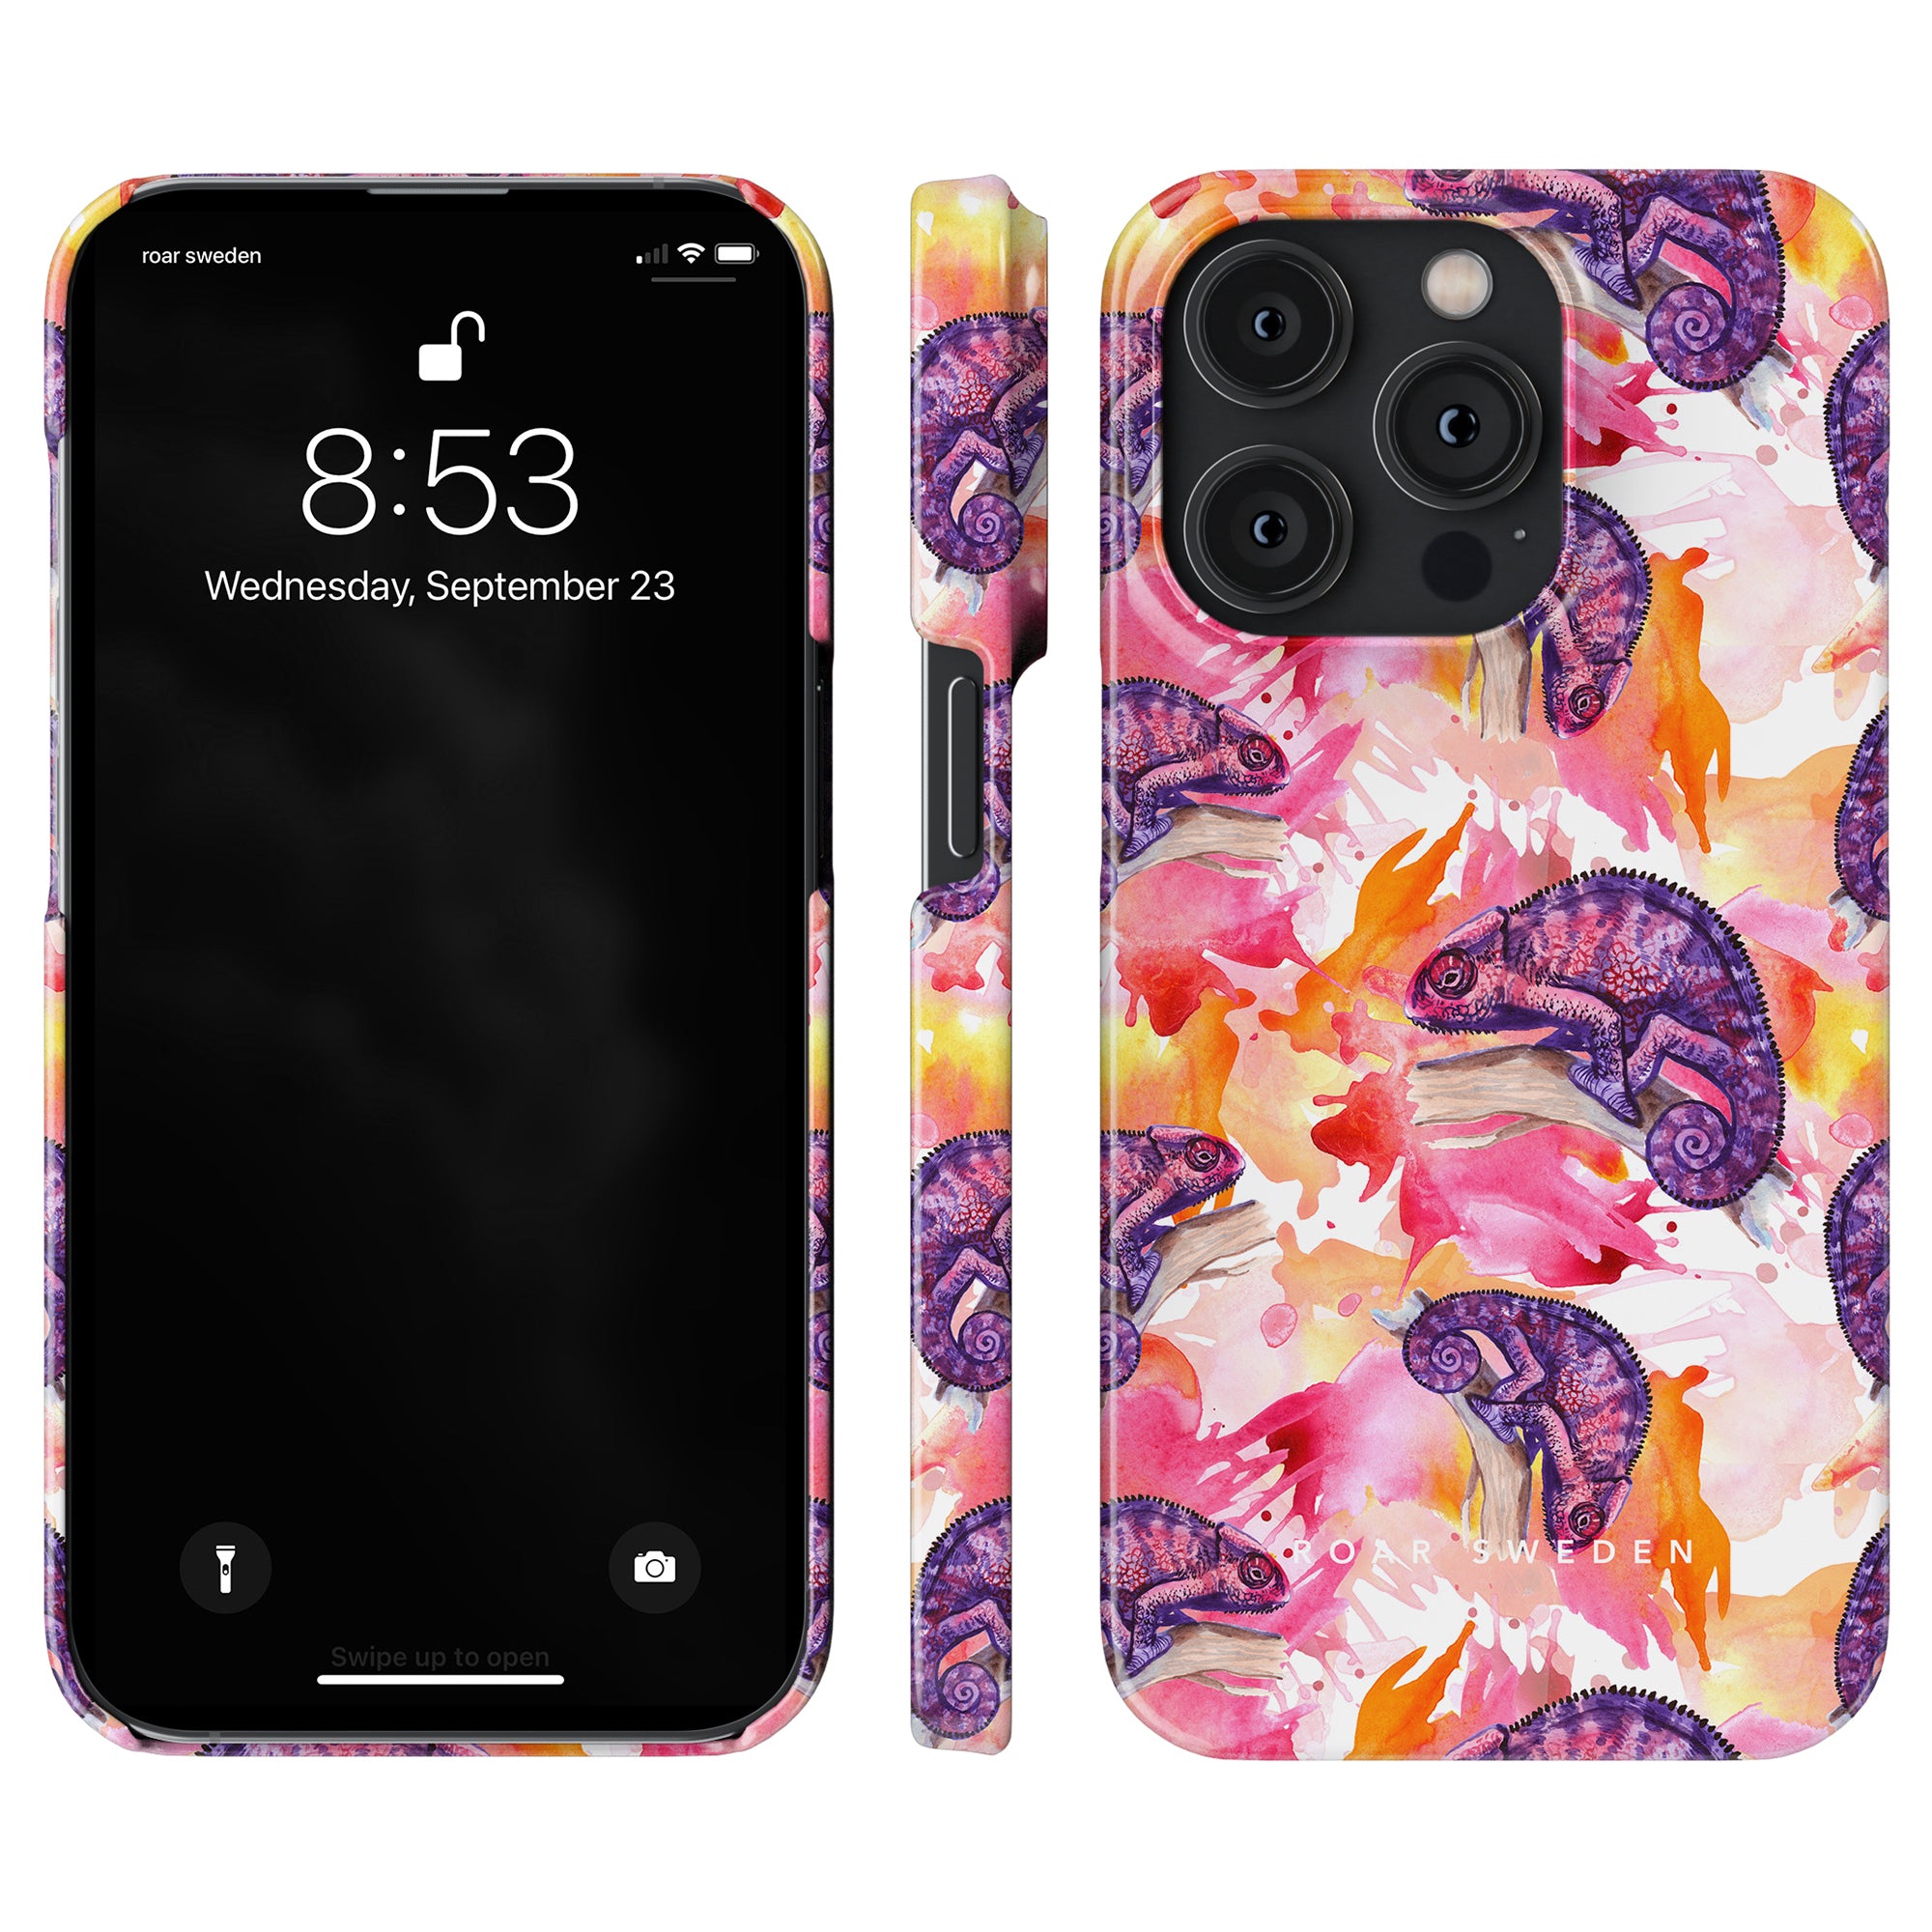 Beskrivning: Ett Chameleon - Slim case mobilskal med rosa och lila blommönster, med en rosa blomma på det.